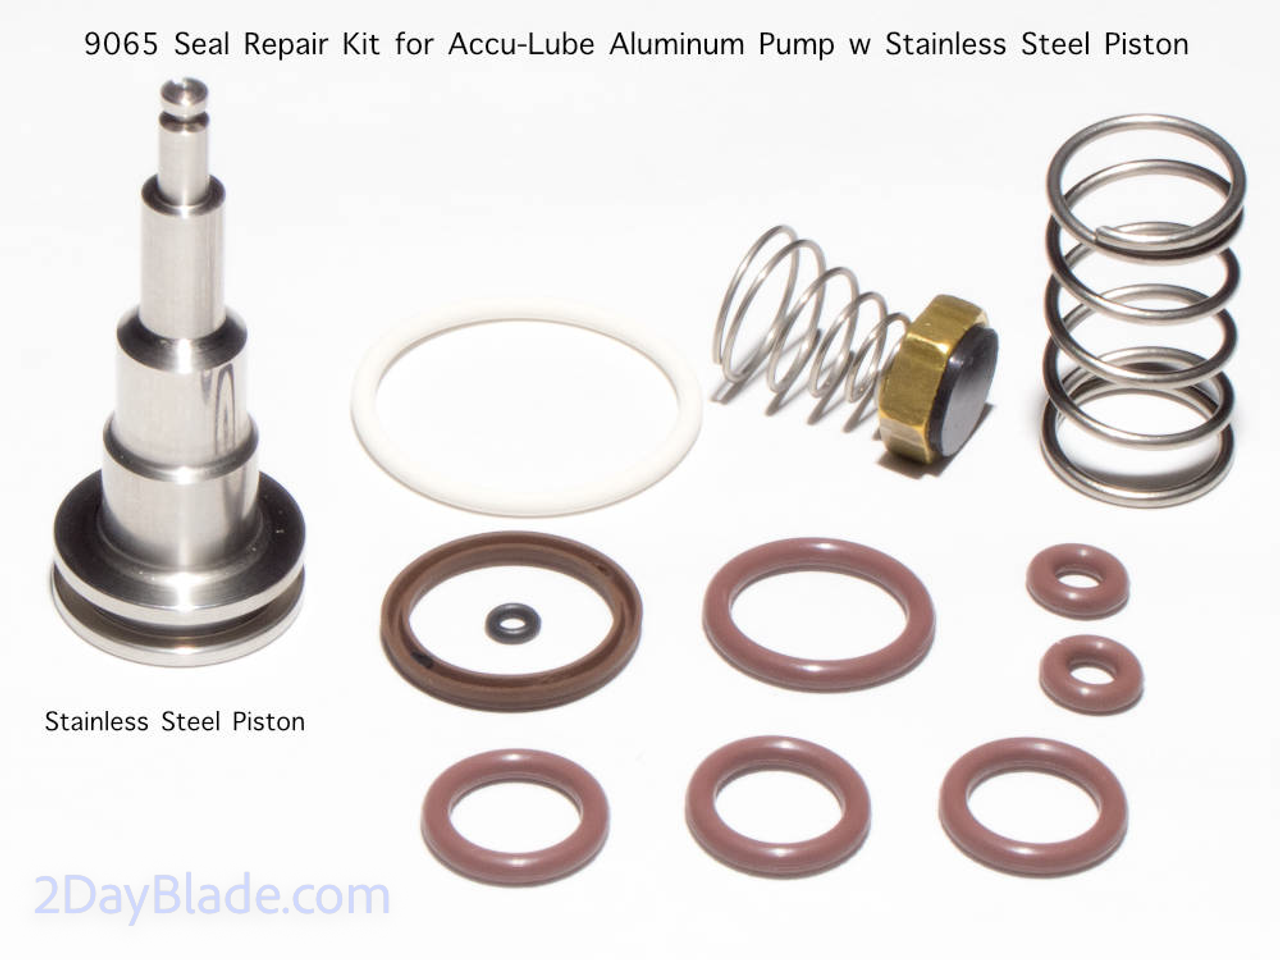 Accu-Lube, 9065, Pump Repair Kit with Stainless Steel Piston